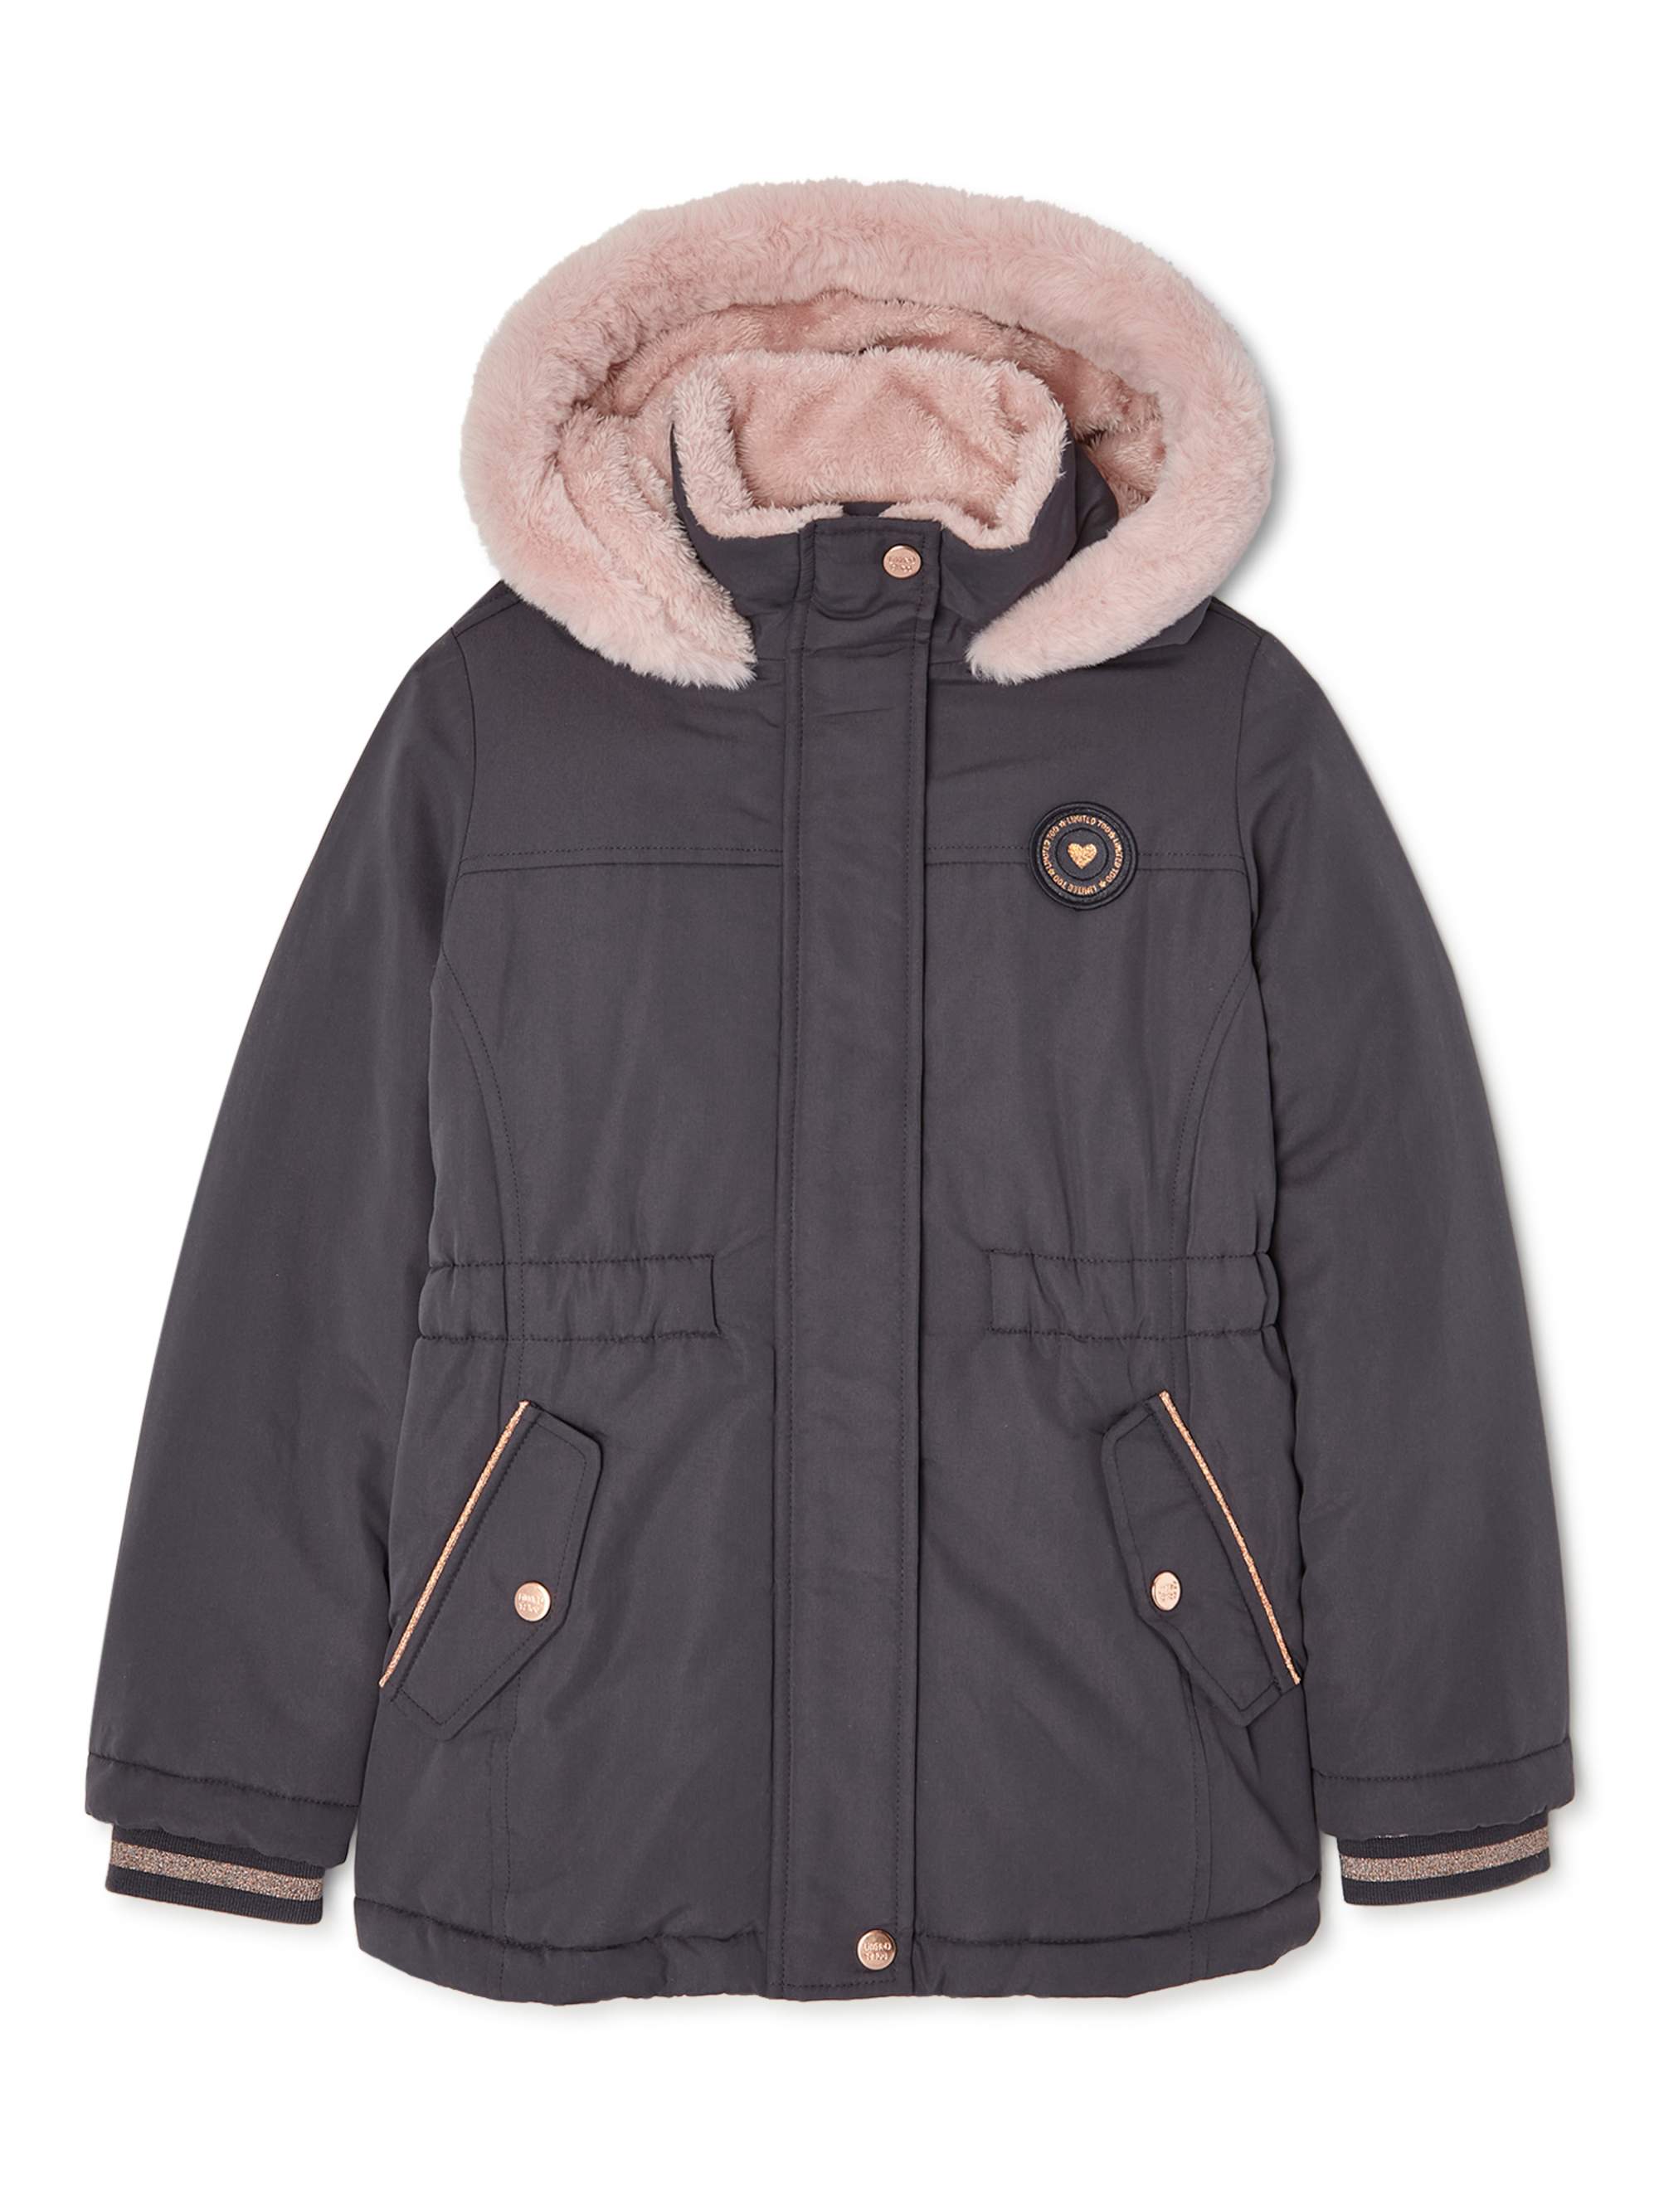 Sherpa Fleece Lined Anorak Jacket with Faux-Fur Trim Hood Limited Too Girls Winter Coat